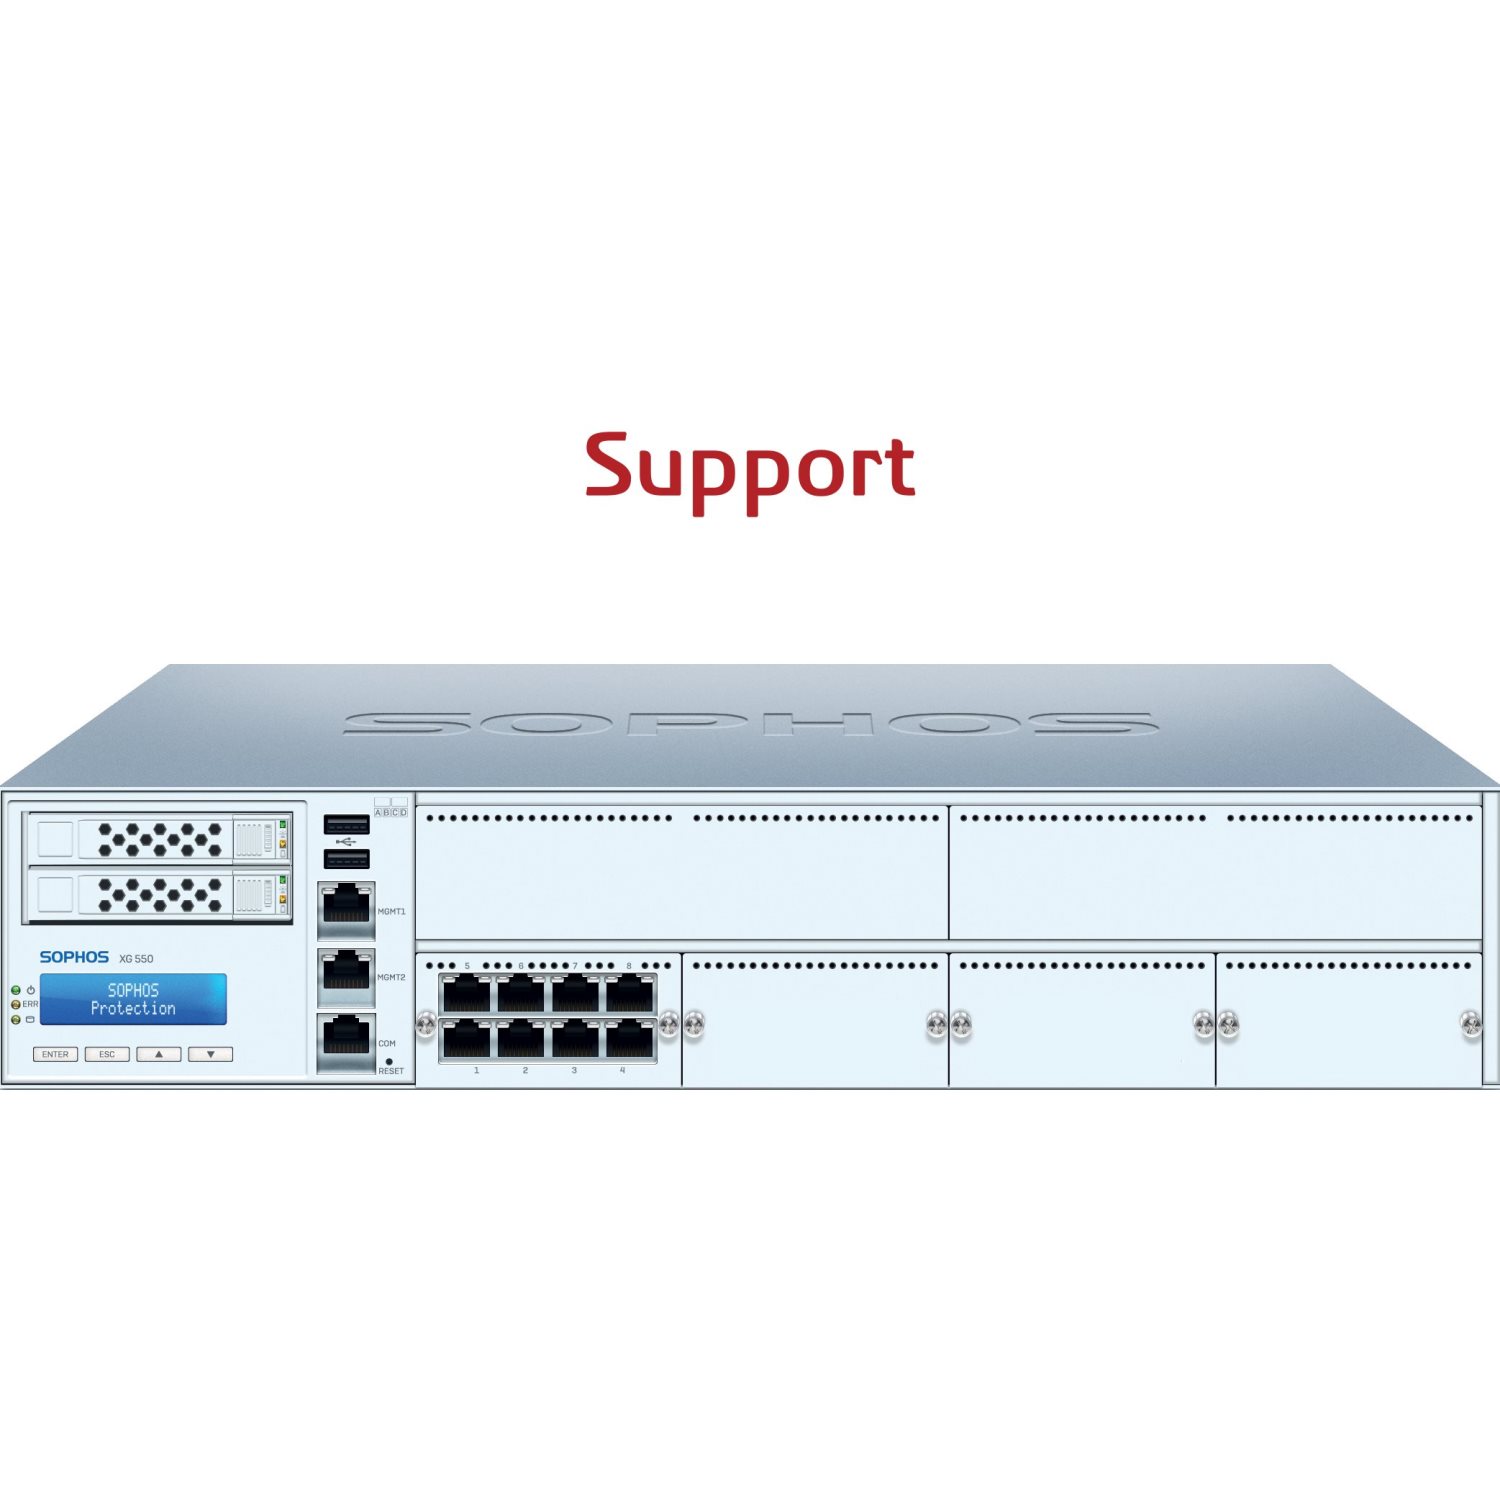  XG / XGS FireWall Support pour Firewall Sophos XG 750 XG750